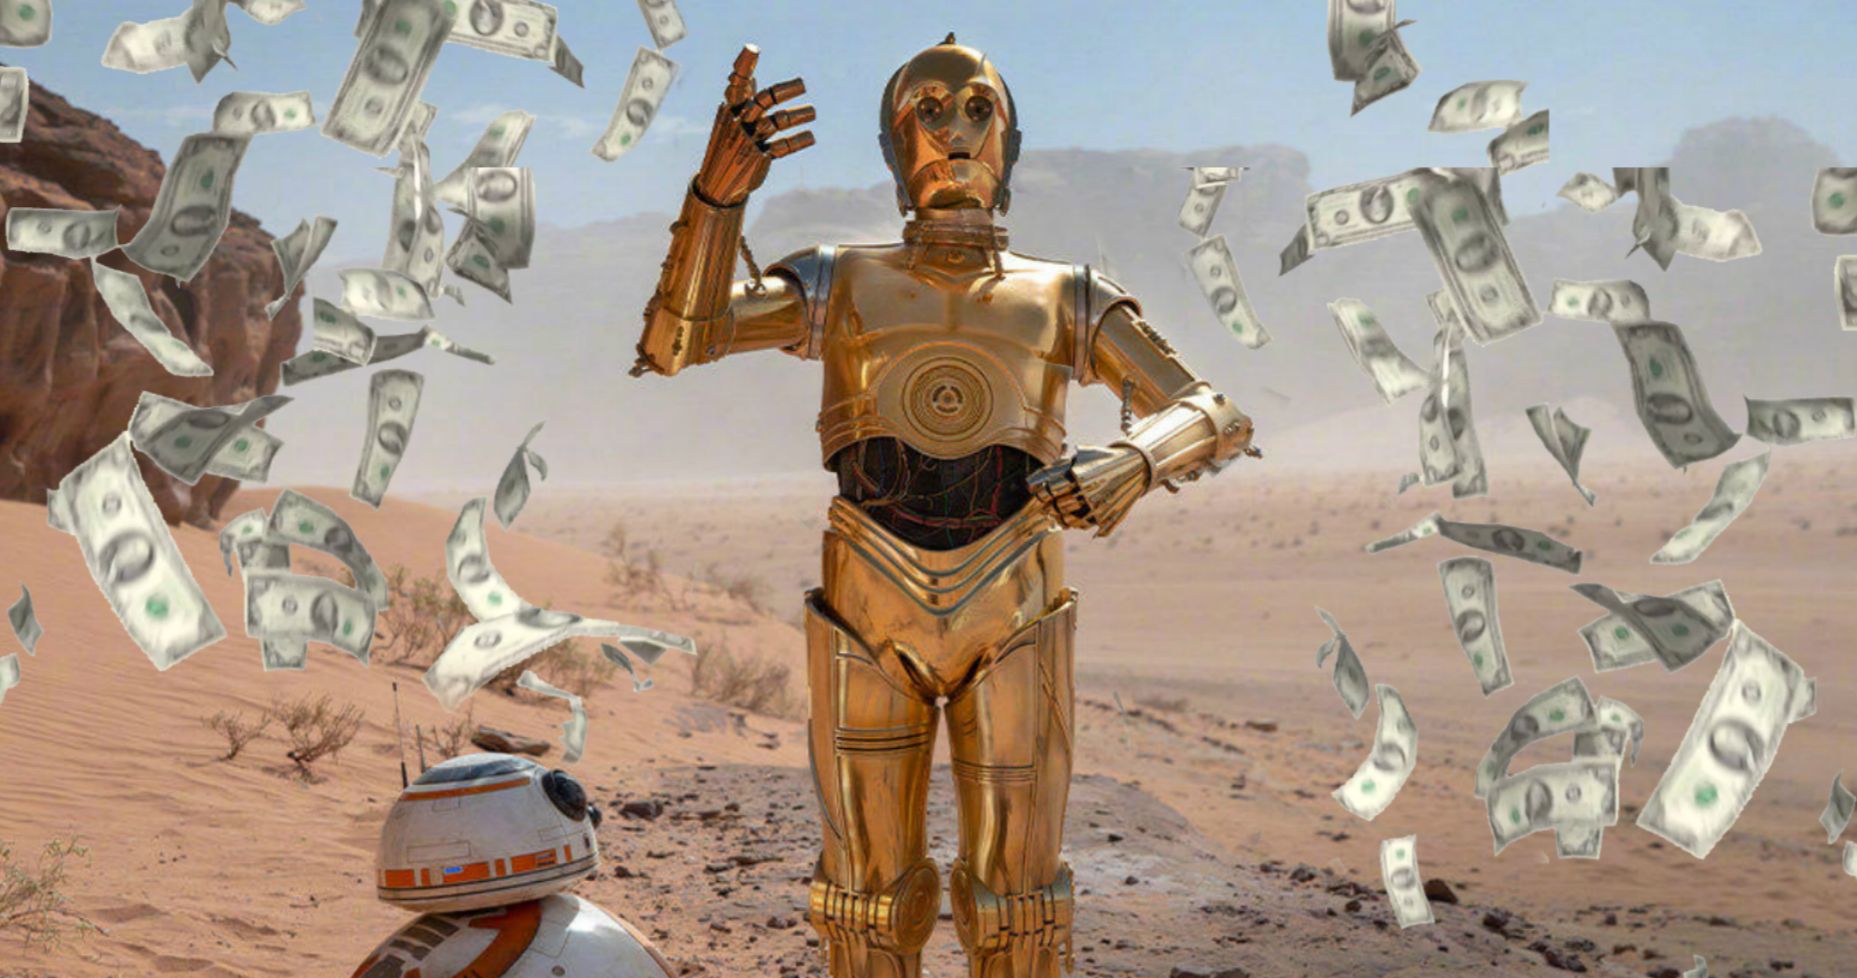 The Rise of Skywalker Lightspeed Skips Past $1 Billion at the Box Office